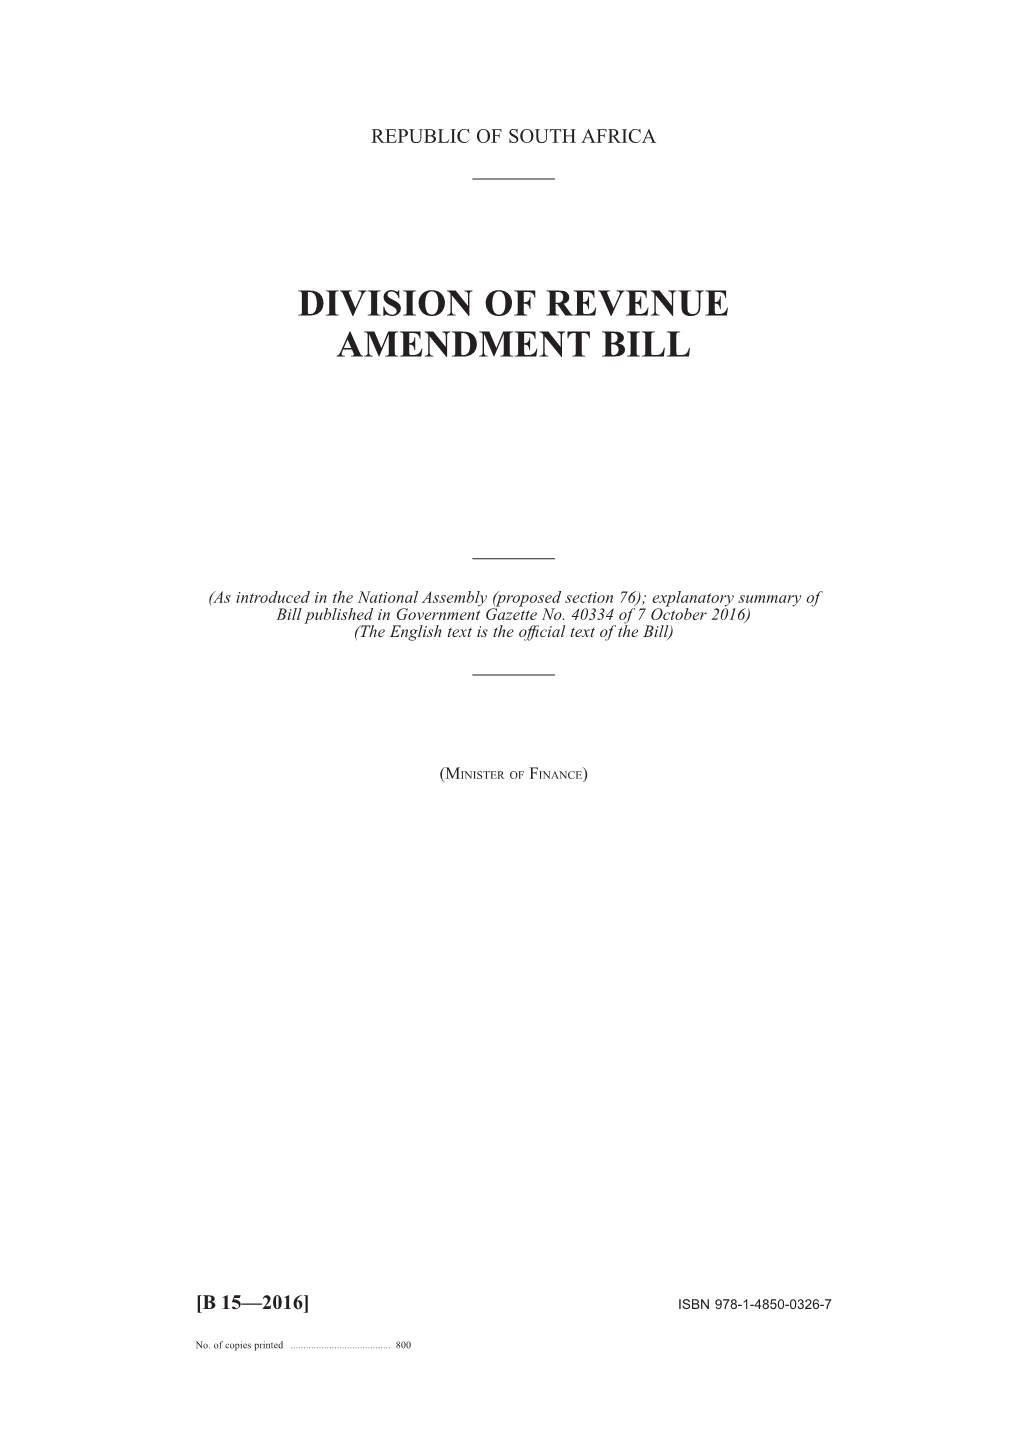 Division of Revenue Amendment Bill